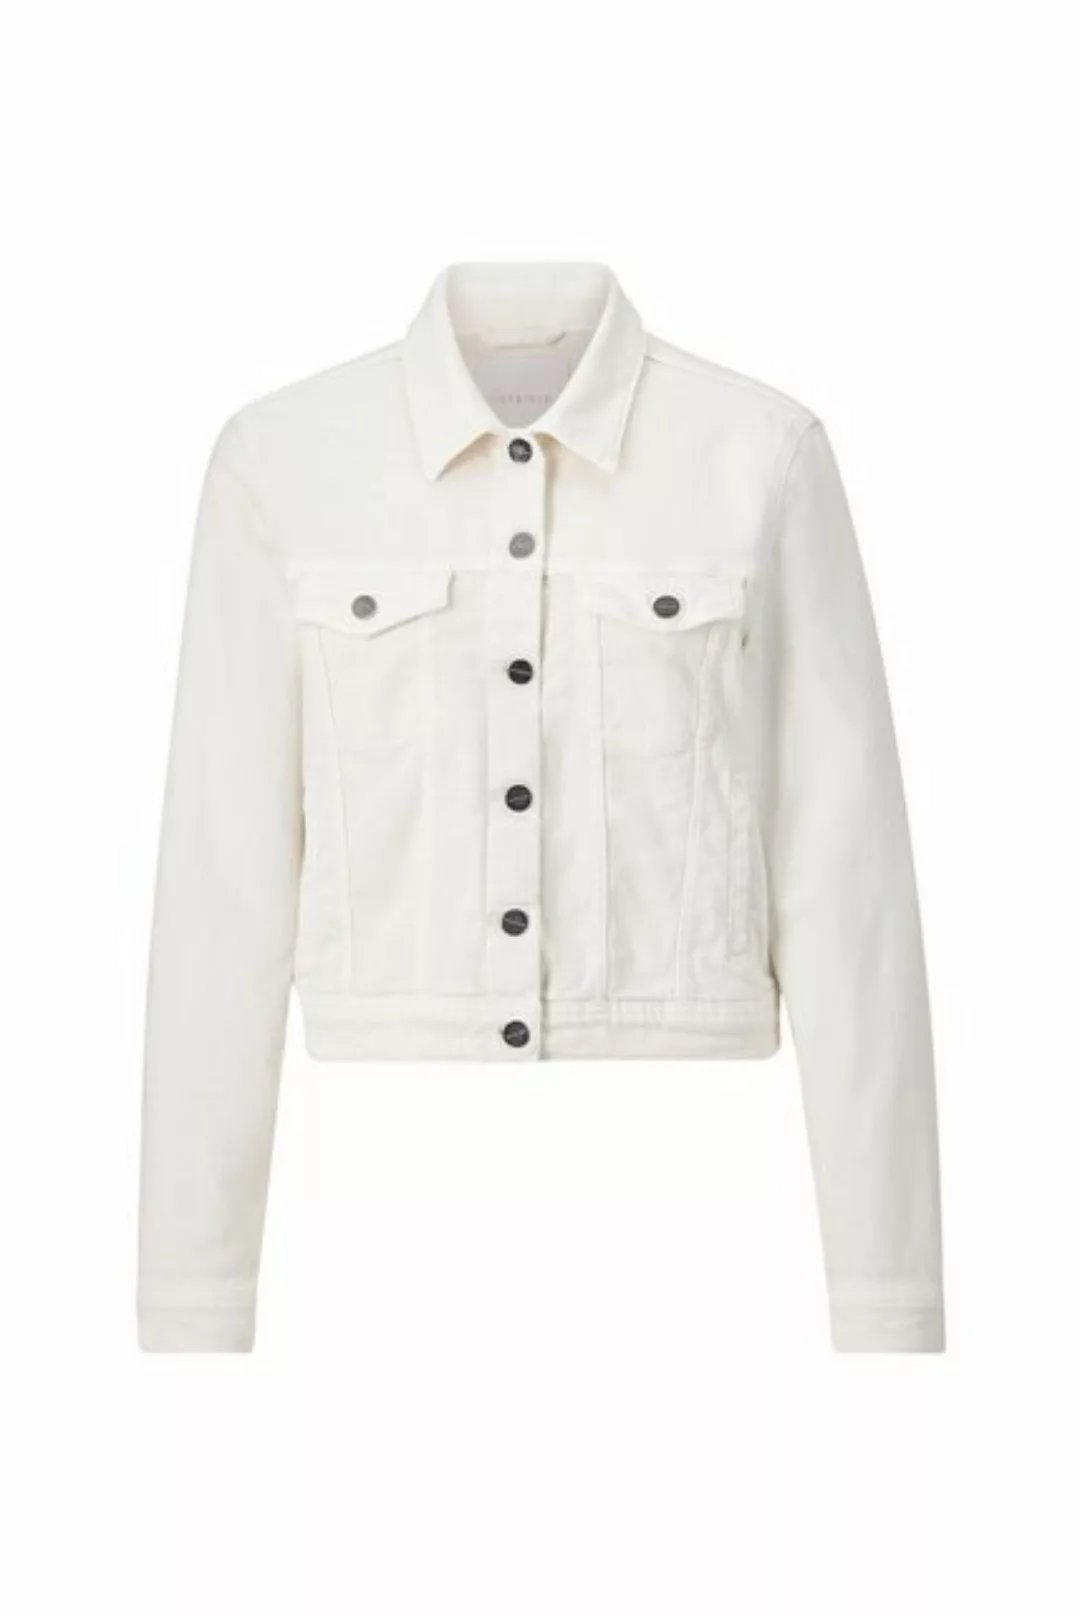 Rich & Royal Langmantel white denim jacket o günstig online kaufen